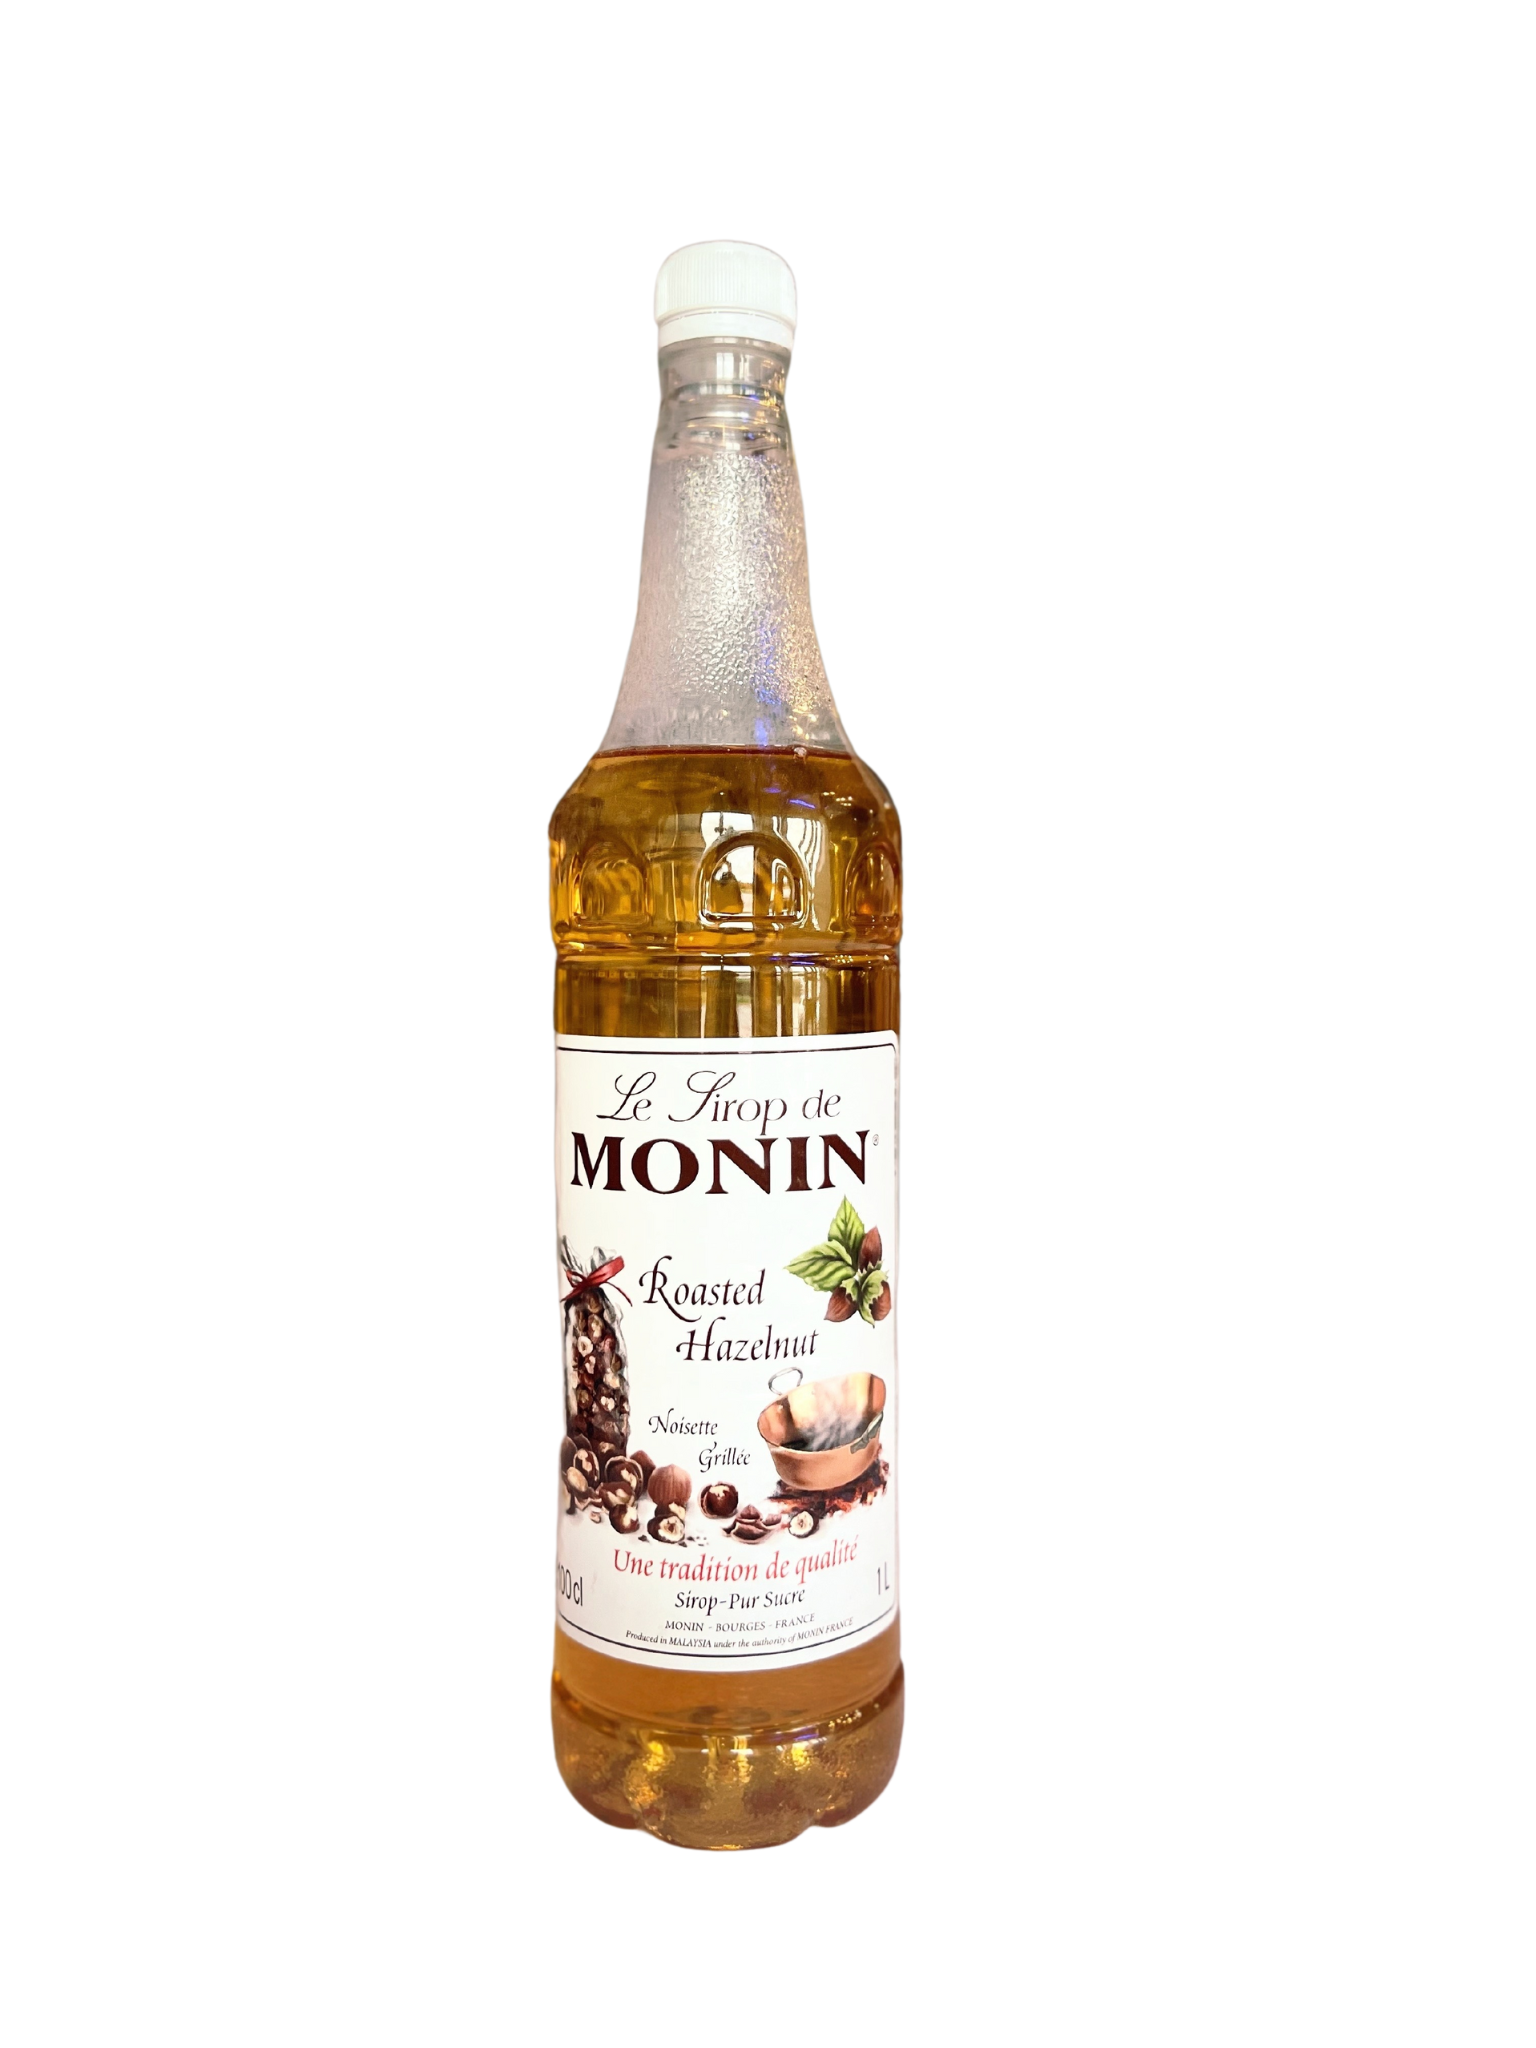 Monin Sirop Noisette Grillee - Roasted Hazelnut Syrup, France